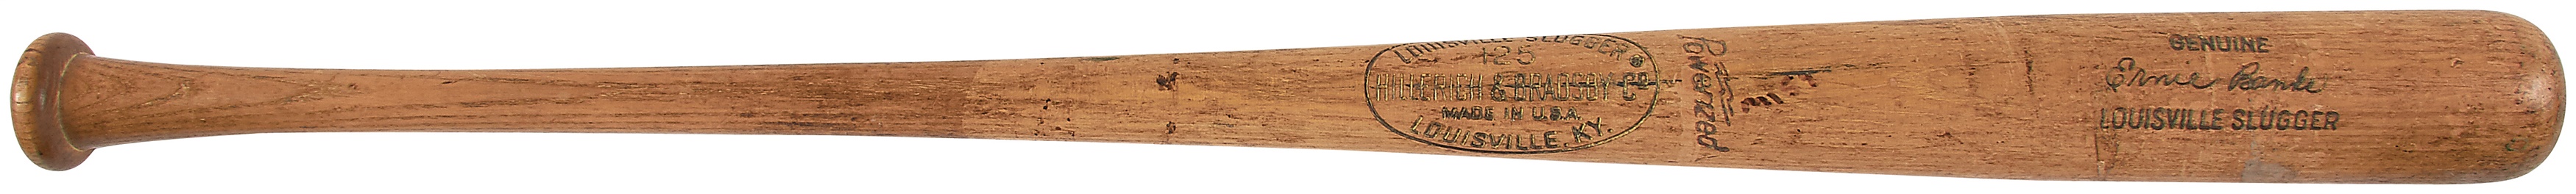 - 1969-72 Ernie Banks Game Used Louisville Slugger M159 Bat